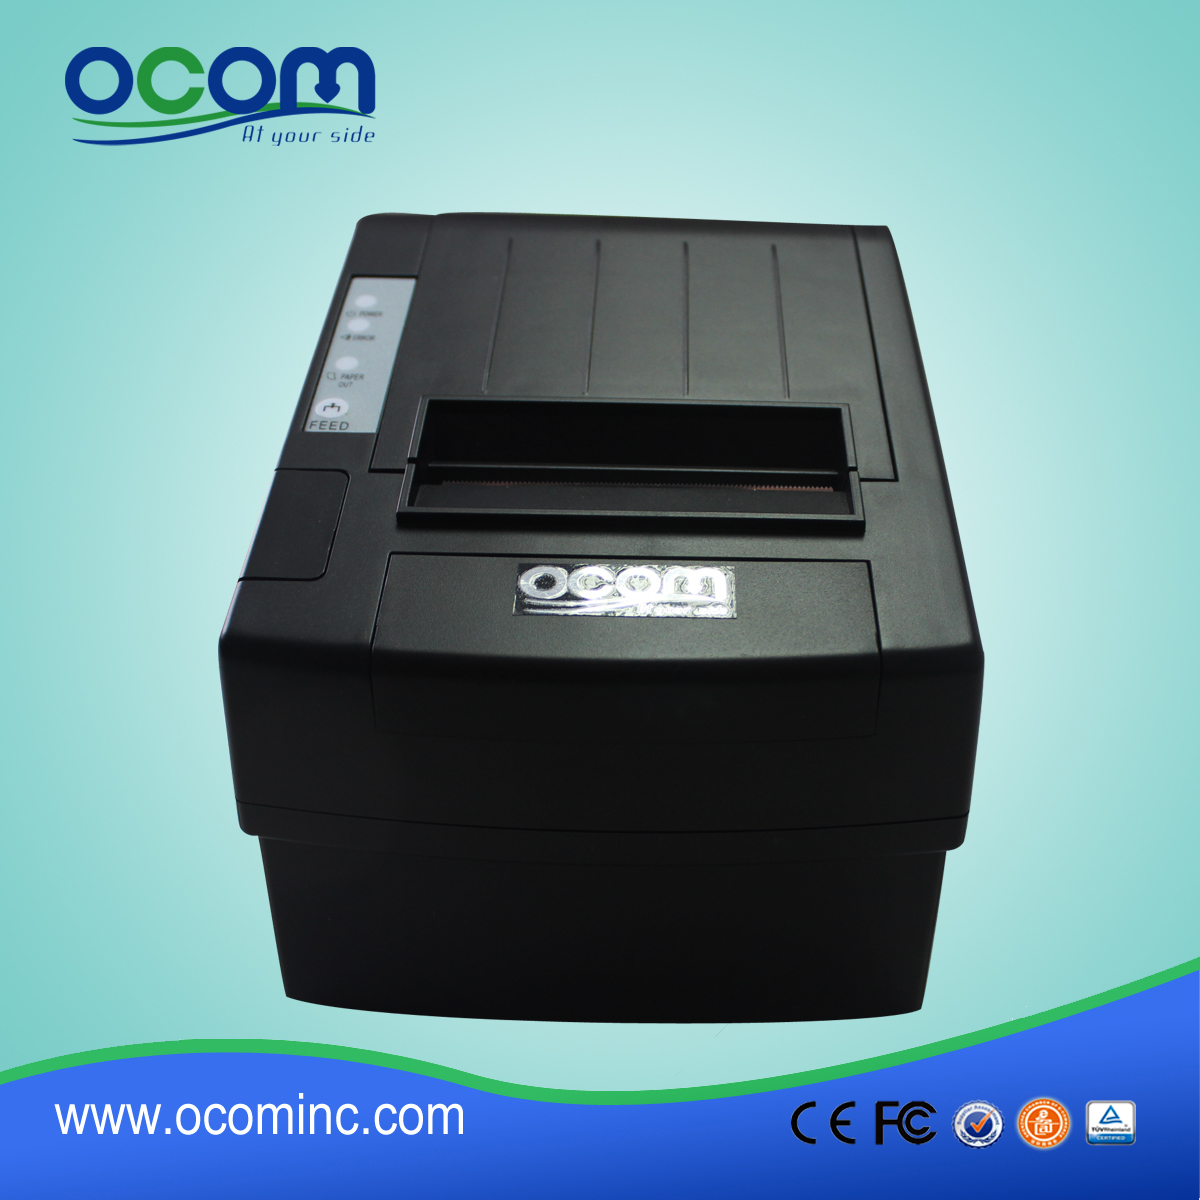 (OCPP-806)China 80mm thermal receipt printer manufacturer